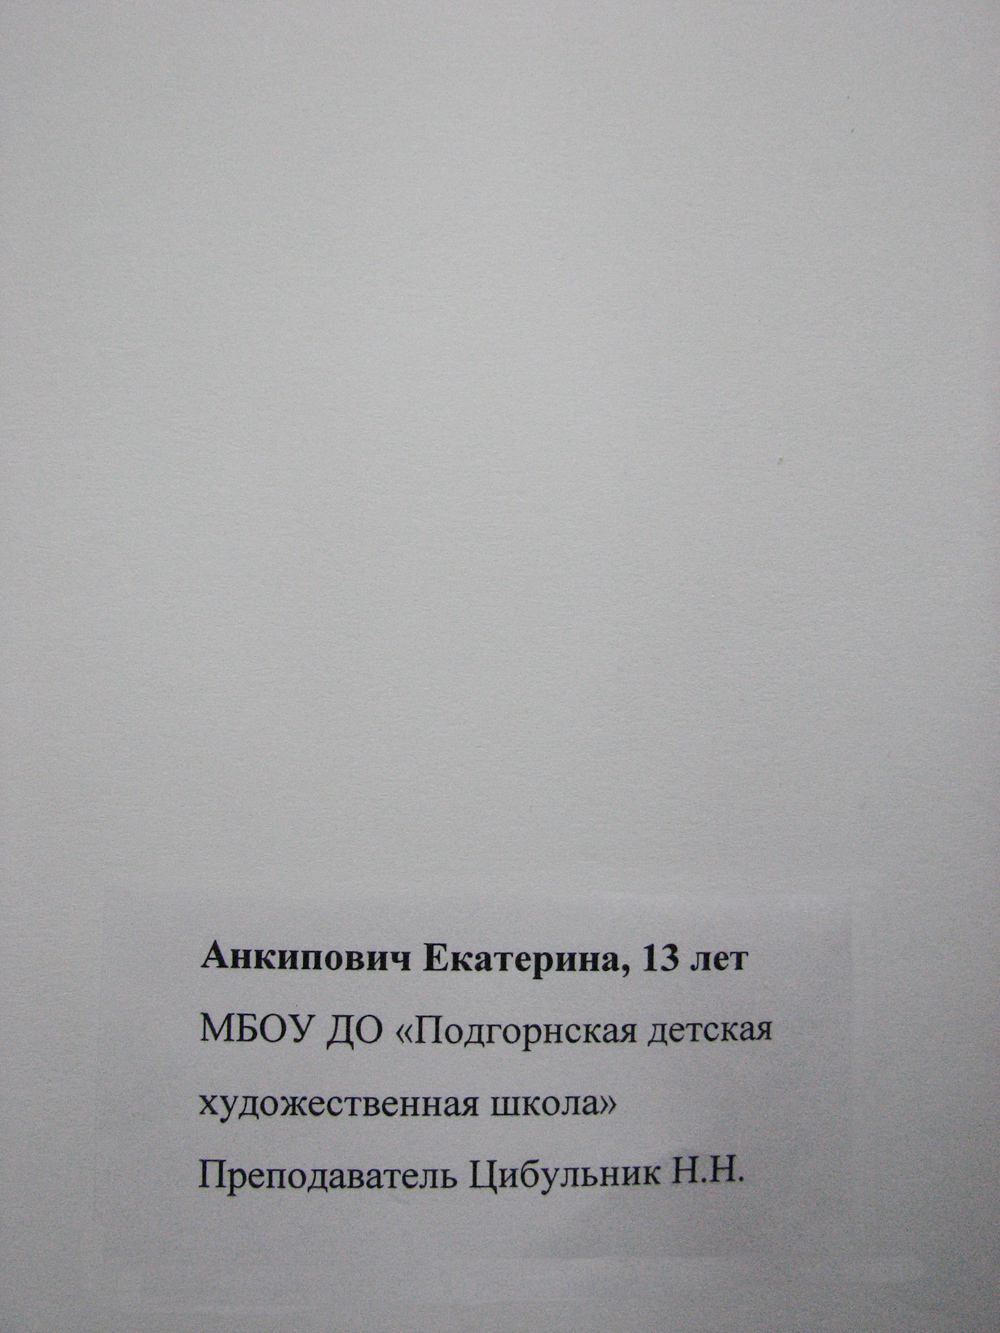 Ankipovich-4.jpg